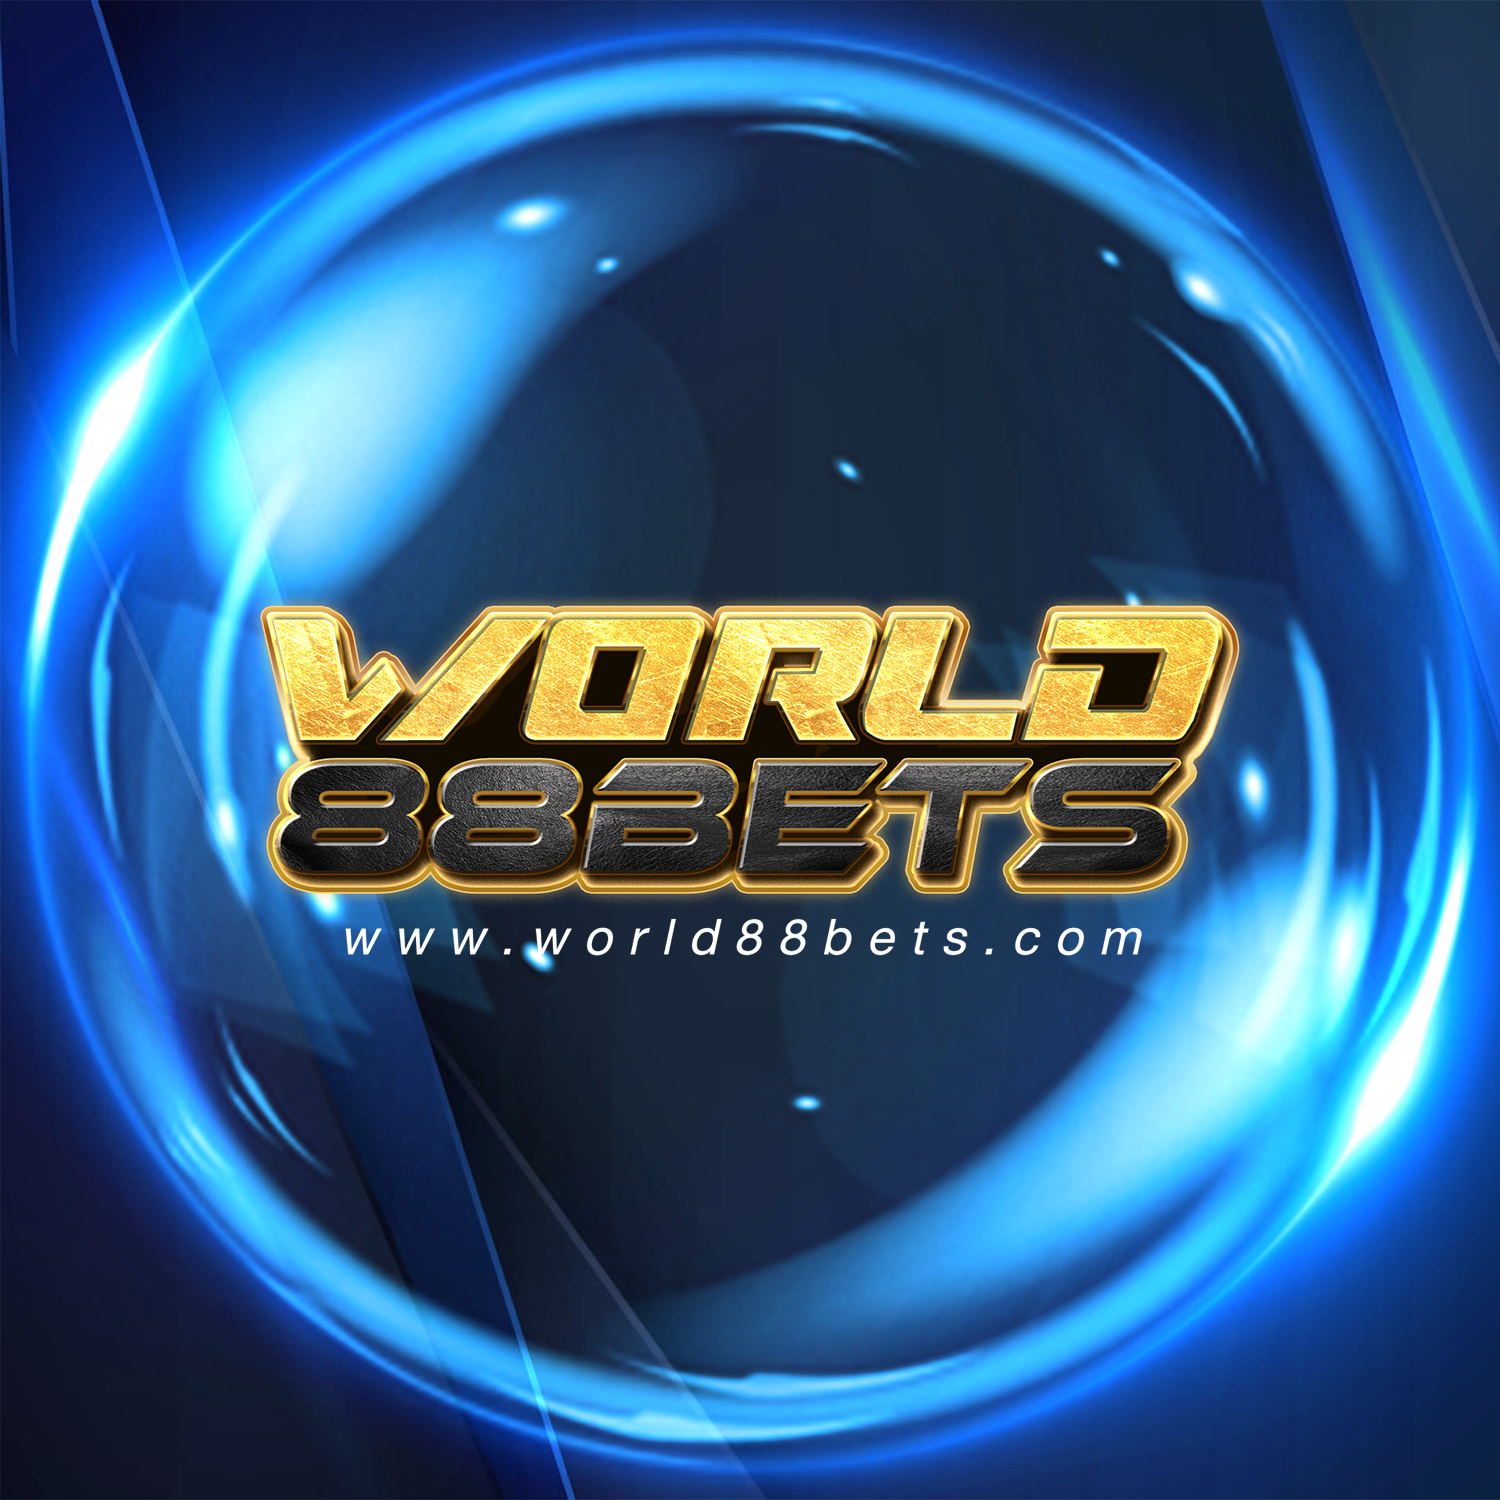 logo world88bets